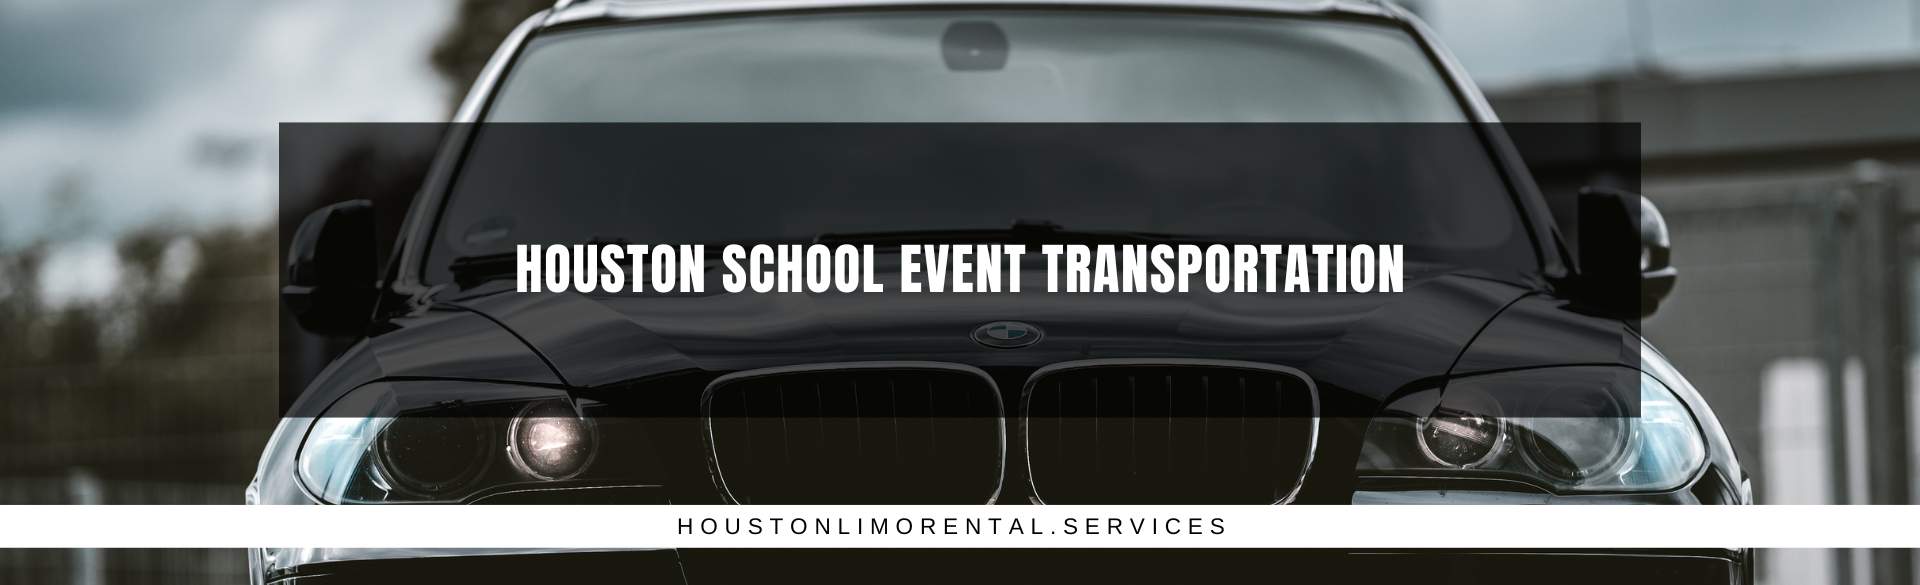 Houston School Event Transportation